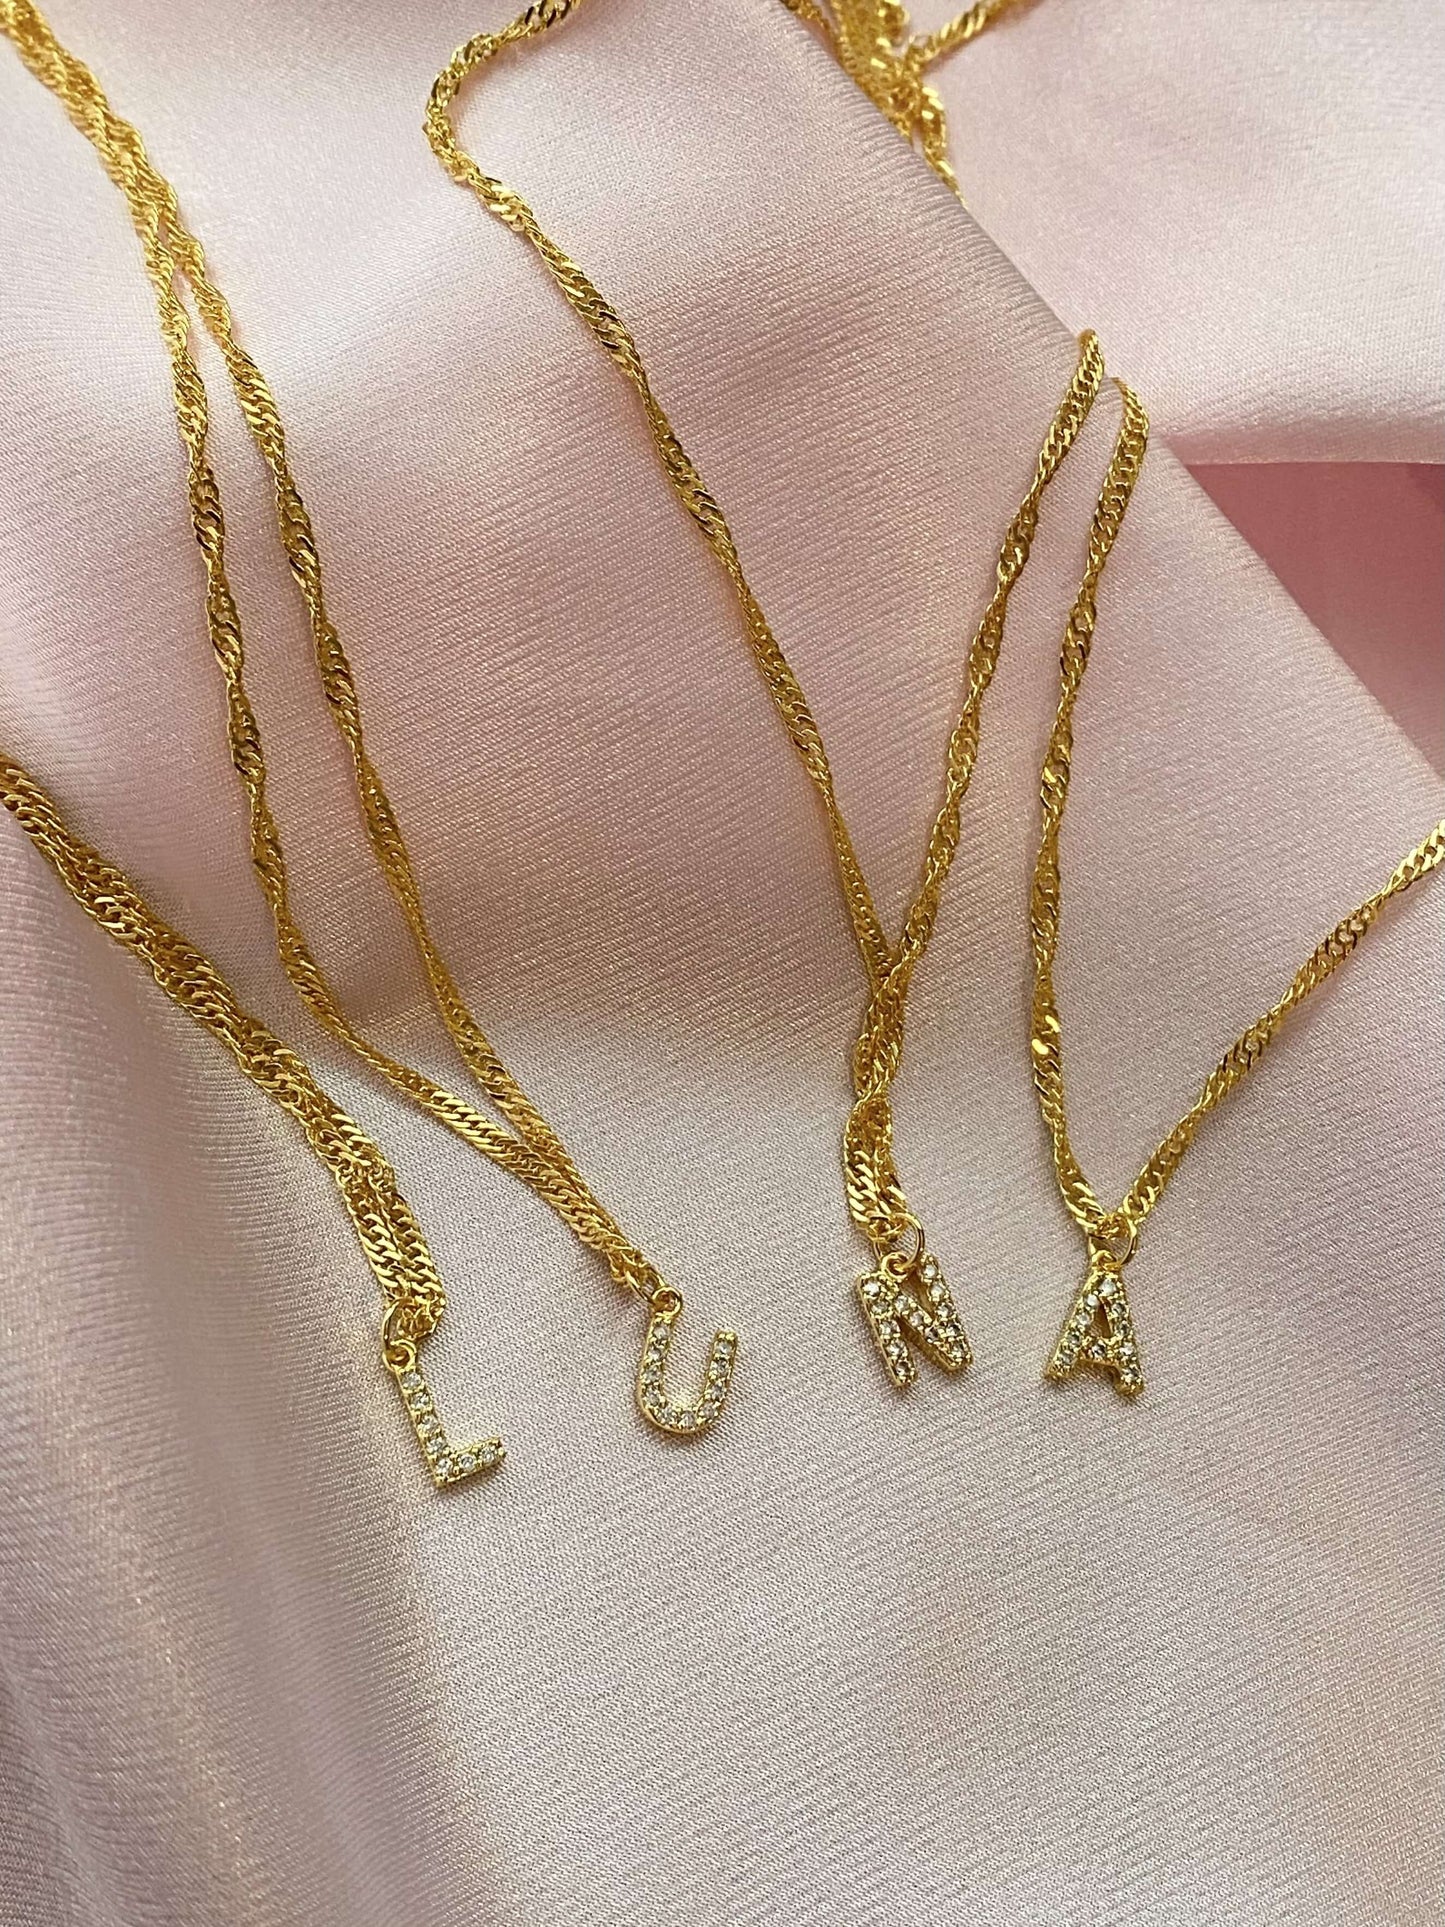 Lucky Charm Necklace (14k gold) - Luna Alaska Jewelry